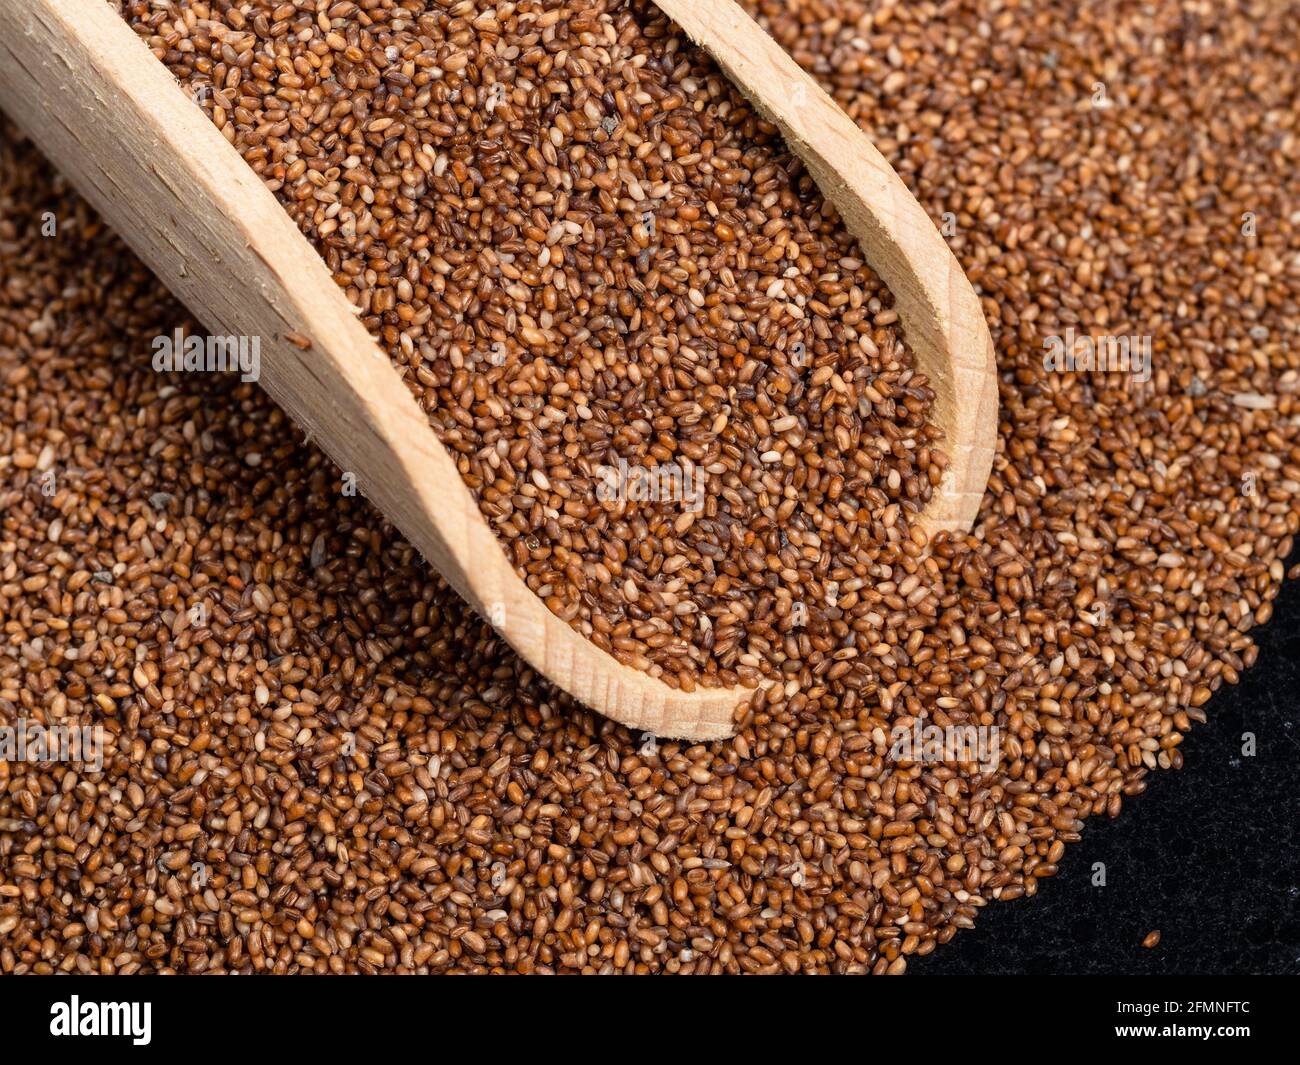 wooden scoop on pile of wholegrain teff seeds closeup Stock Photo